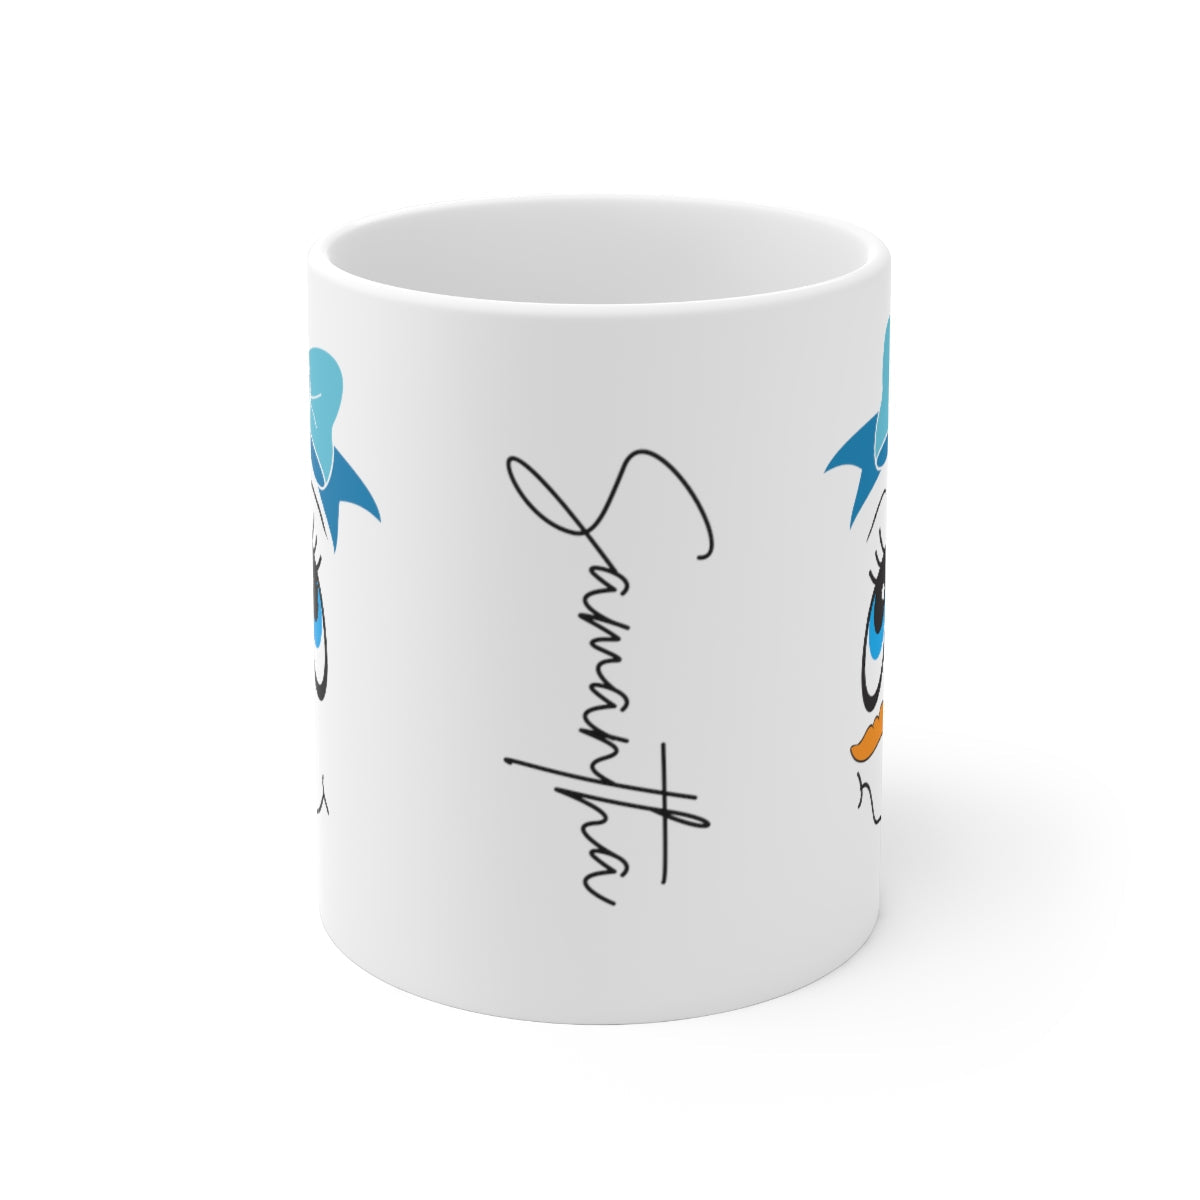 Mrs. A Snowman Mug, Secret Santa Gift, Snowman Face Mug, Personalized Hot Chocolate Mugs, Funny Coffee Mugs